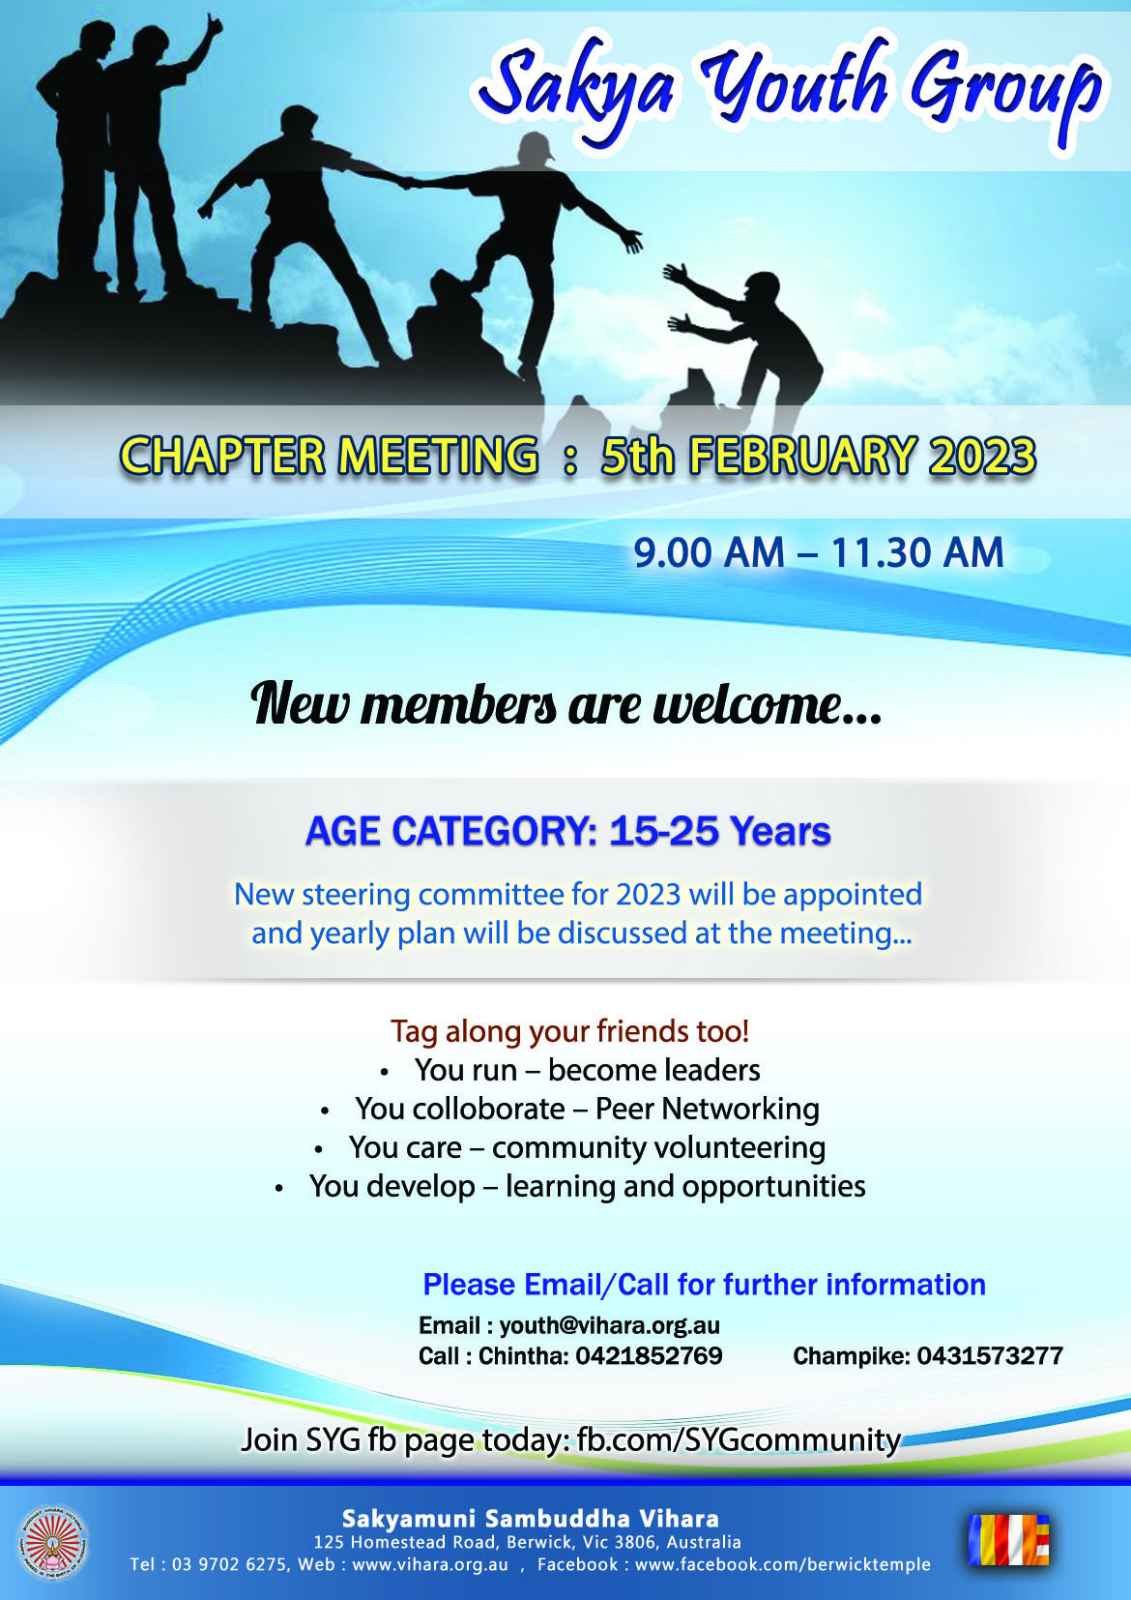 Chapter Meeting - Sakya Youth Group